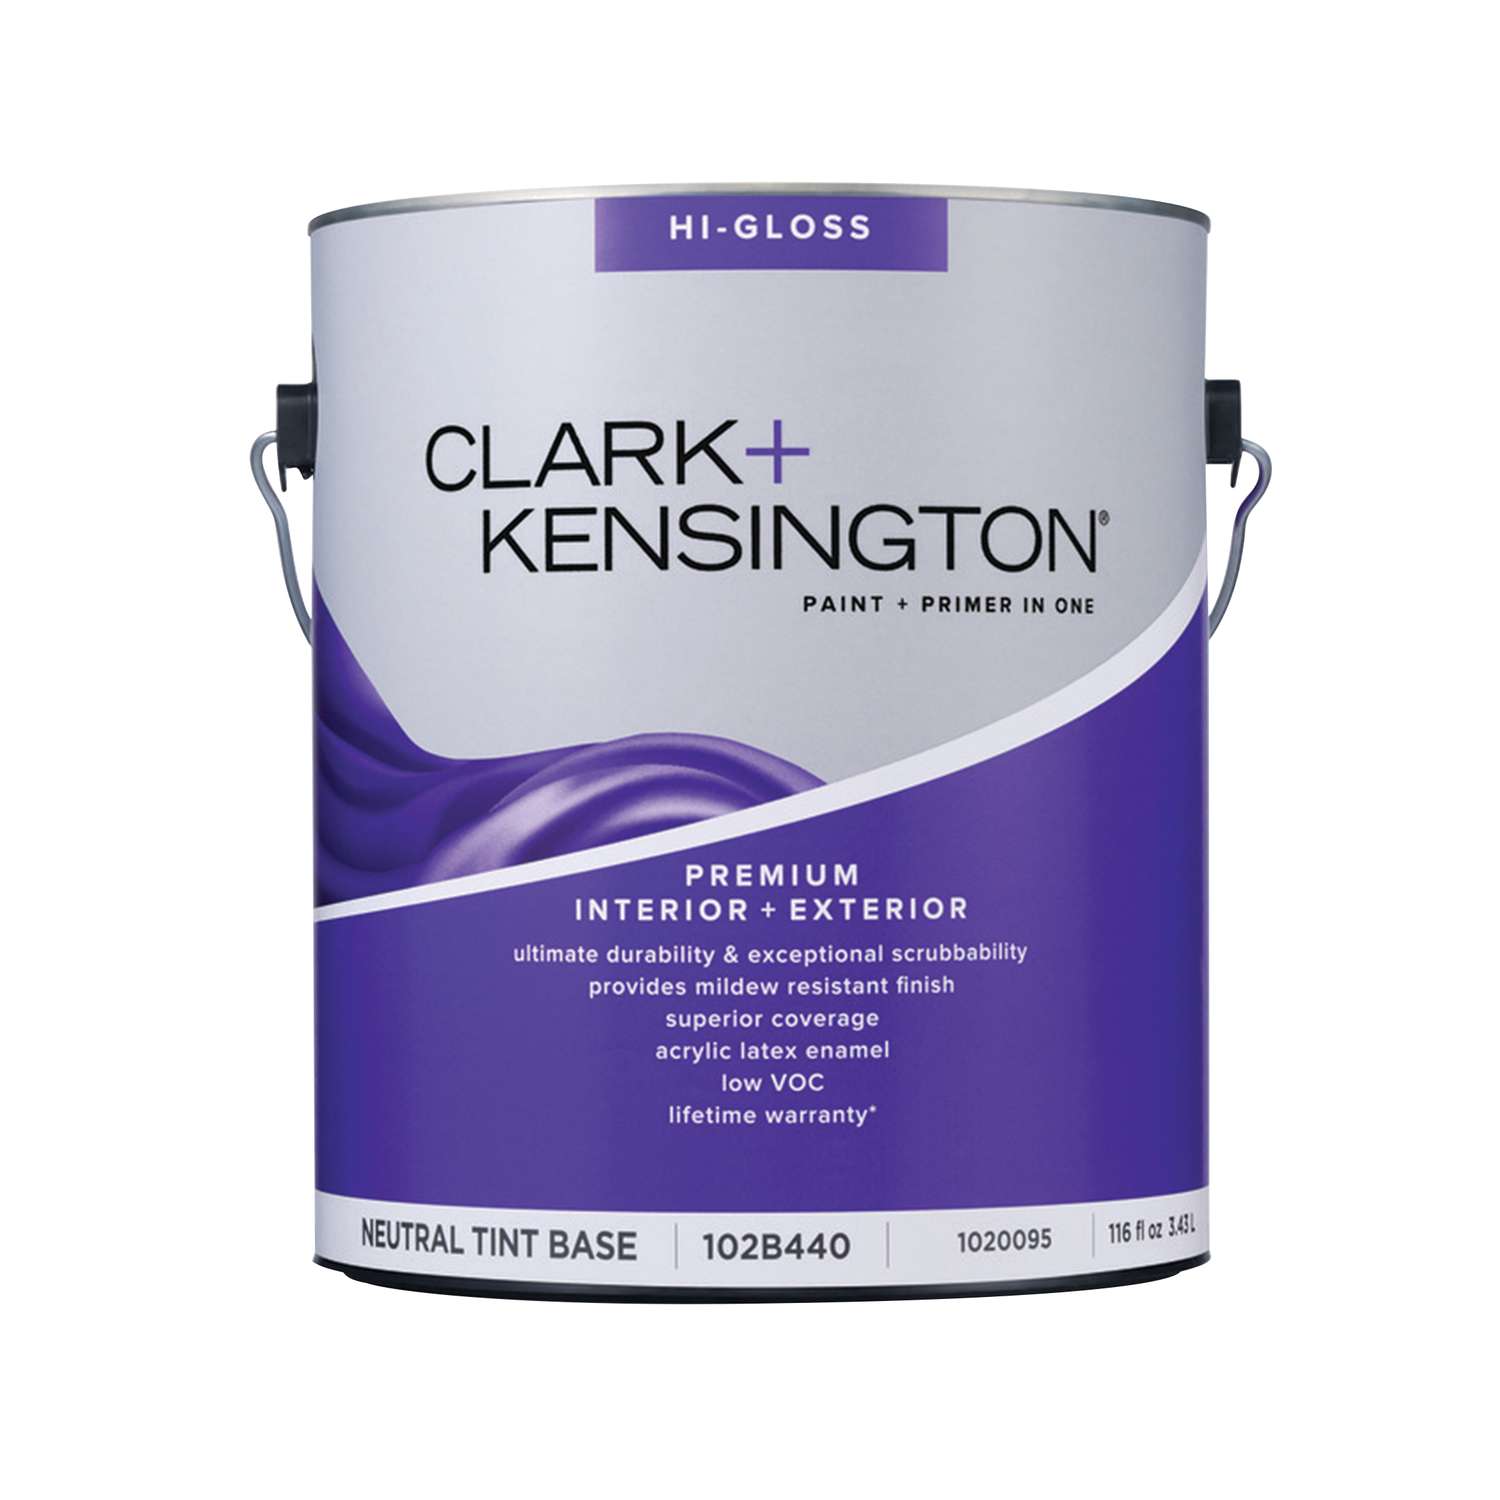 Clark+Kensington Hi-Gloss Tint Base Neutral Base Premium Paint Exterior ...